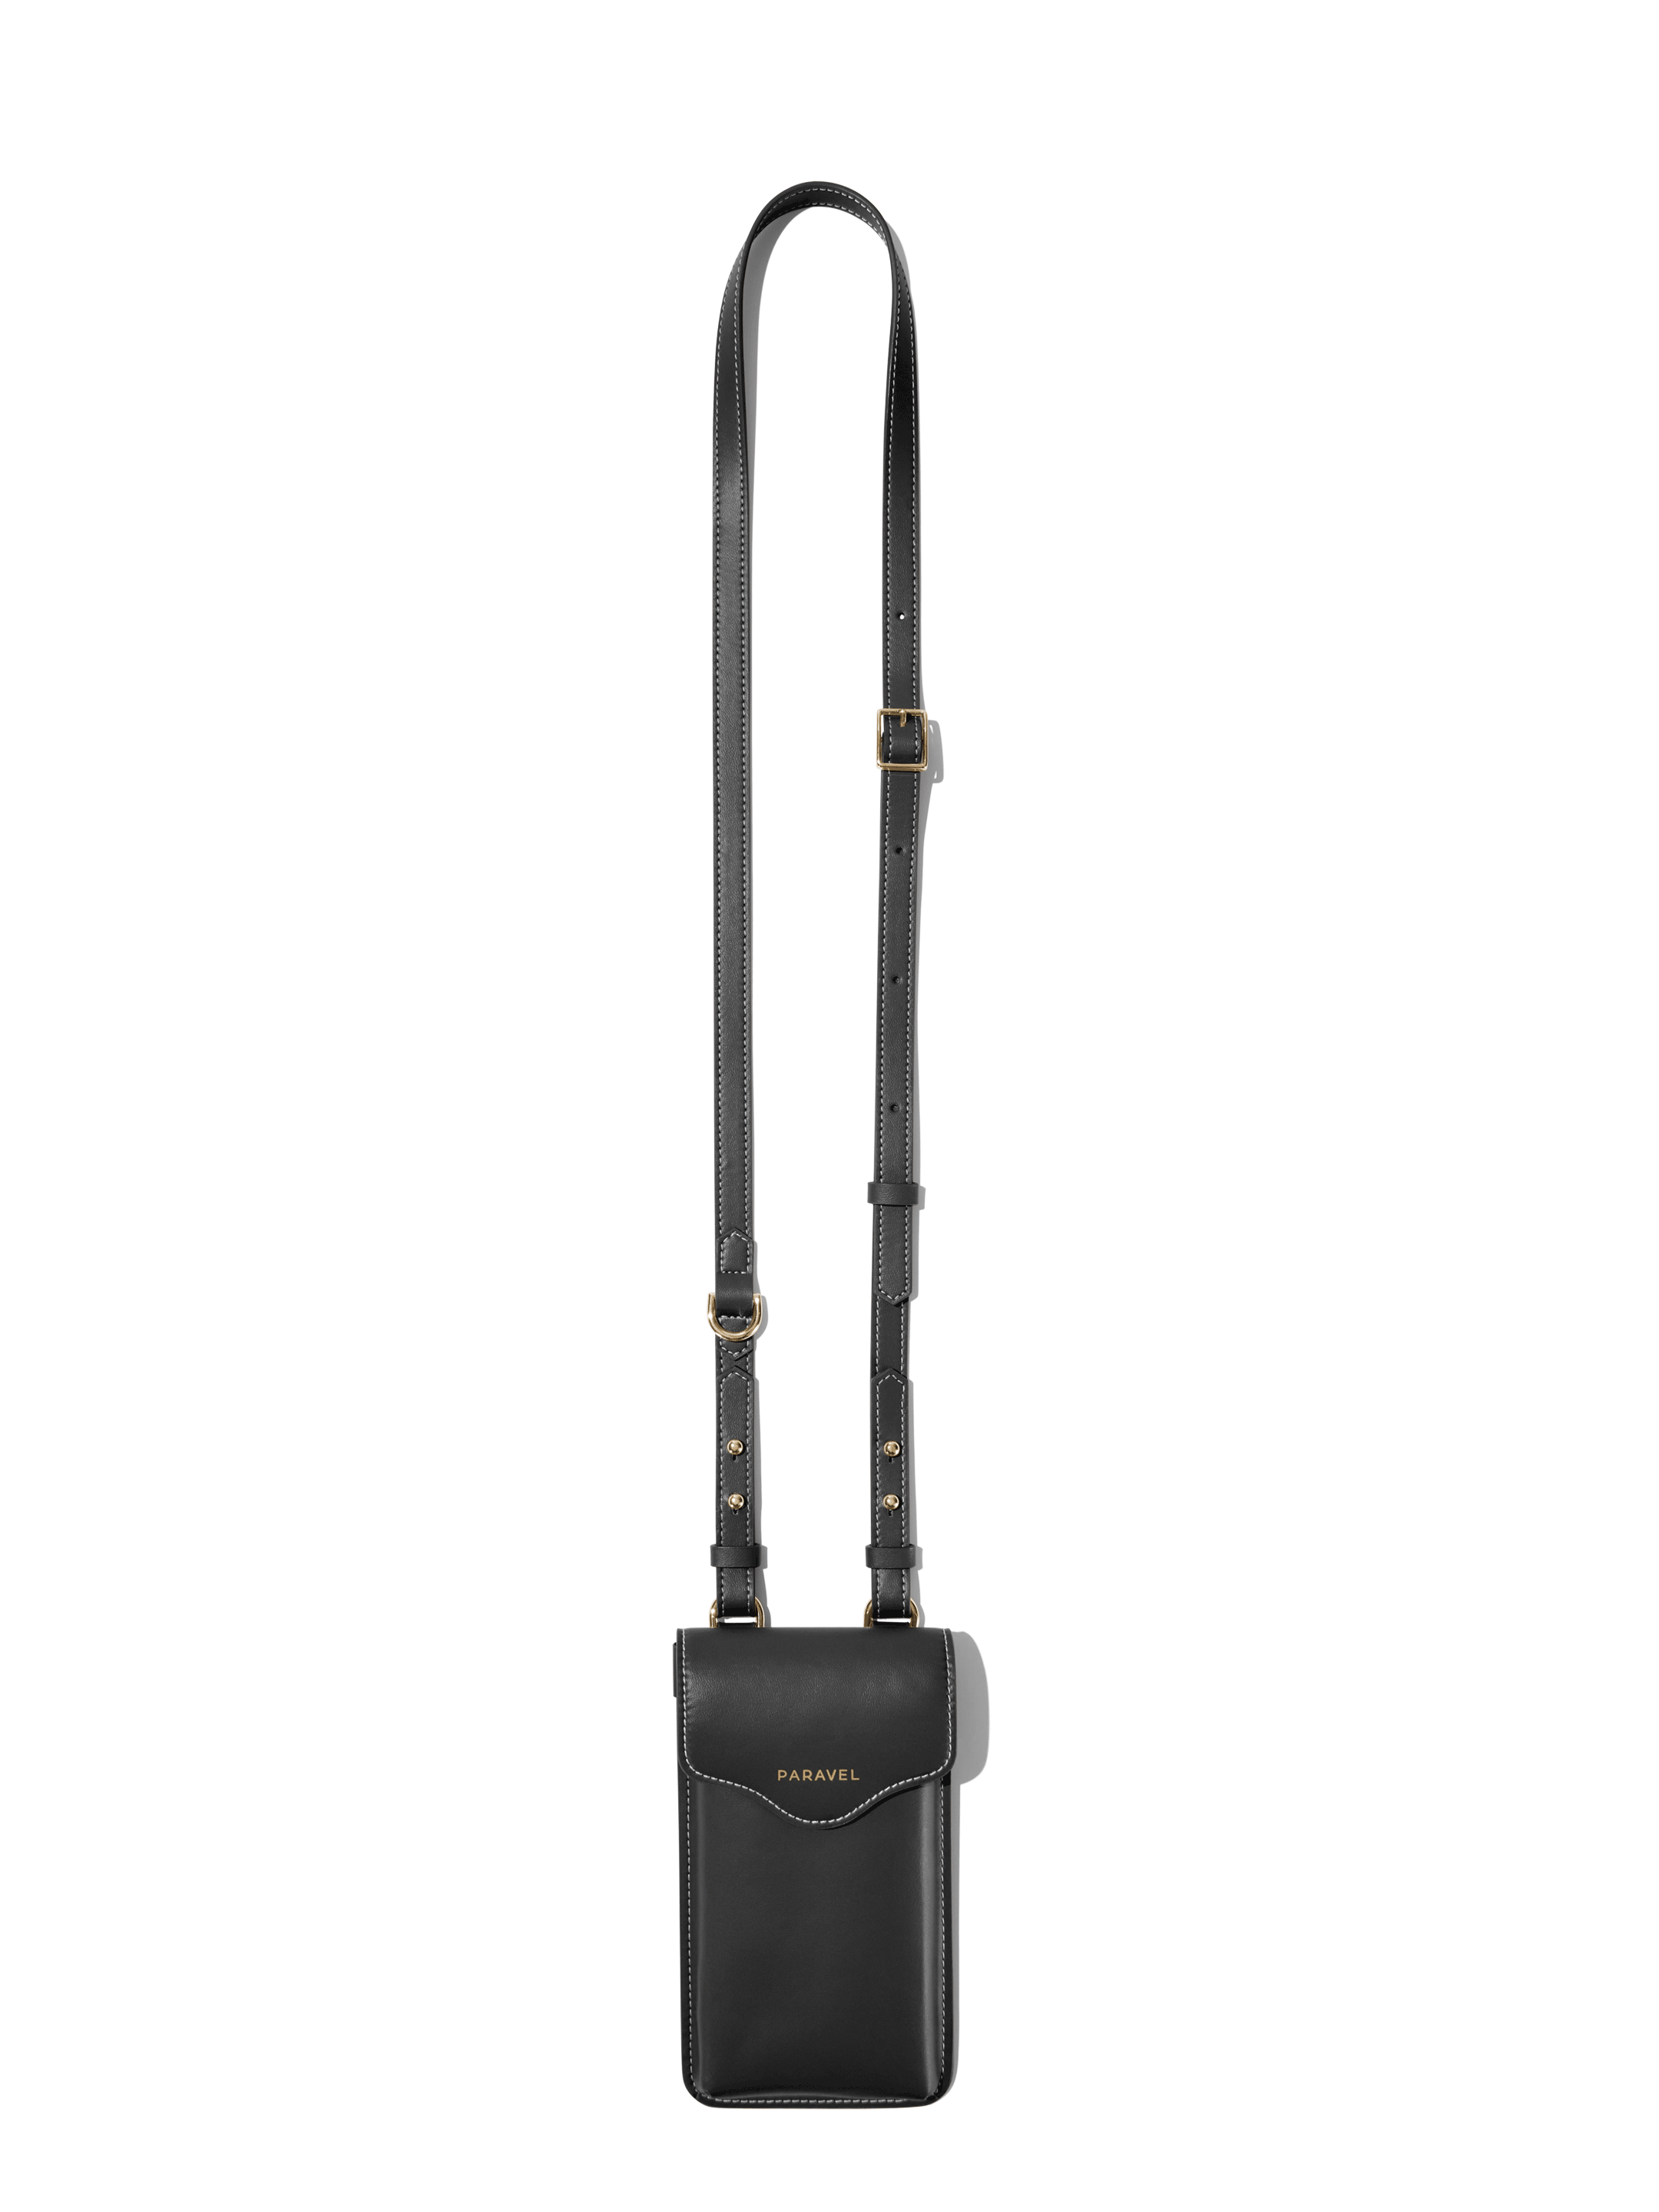 Kate Spade spencer Slim phone Leather crossbody ~NWT~ Black | eBay